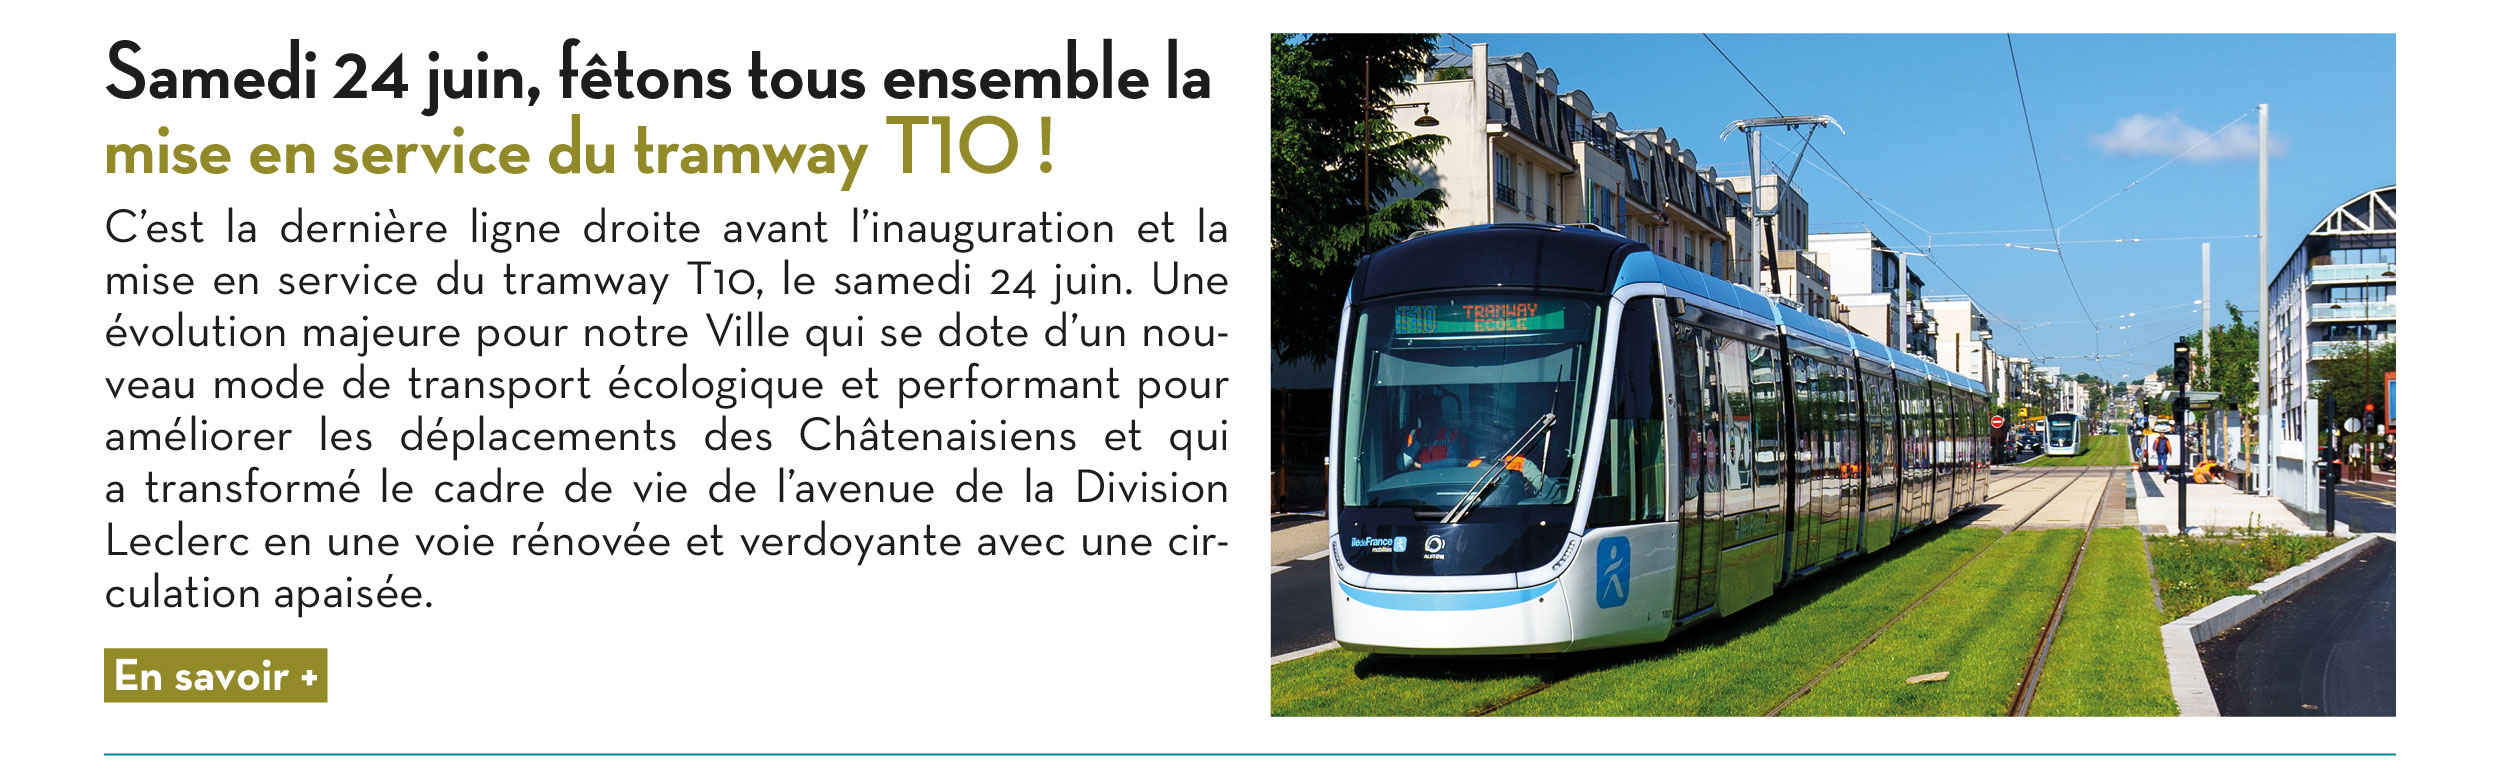 Samedi 24 juin, fêtons tous ensemble la mise en service du tramway T10 !